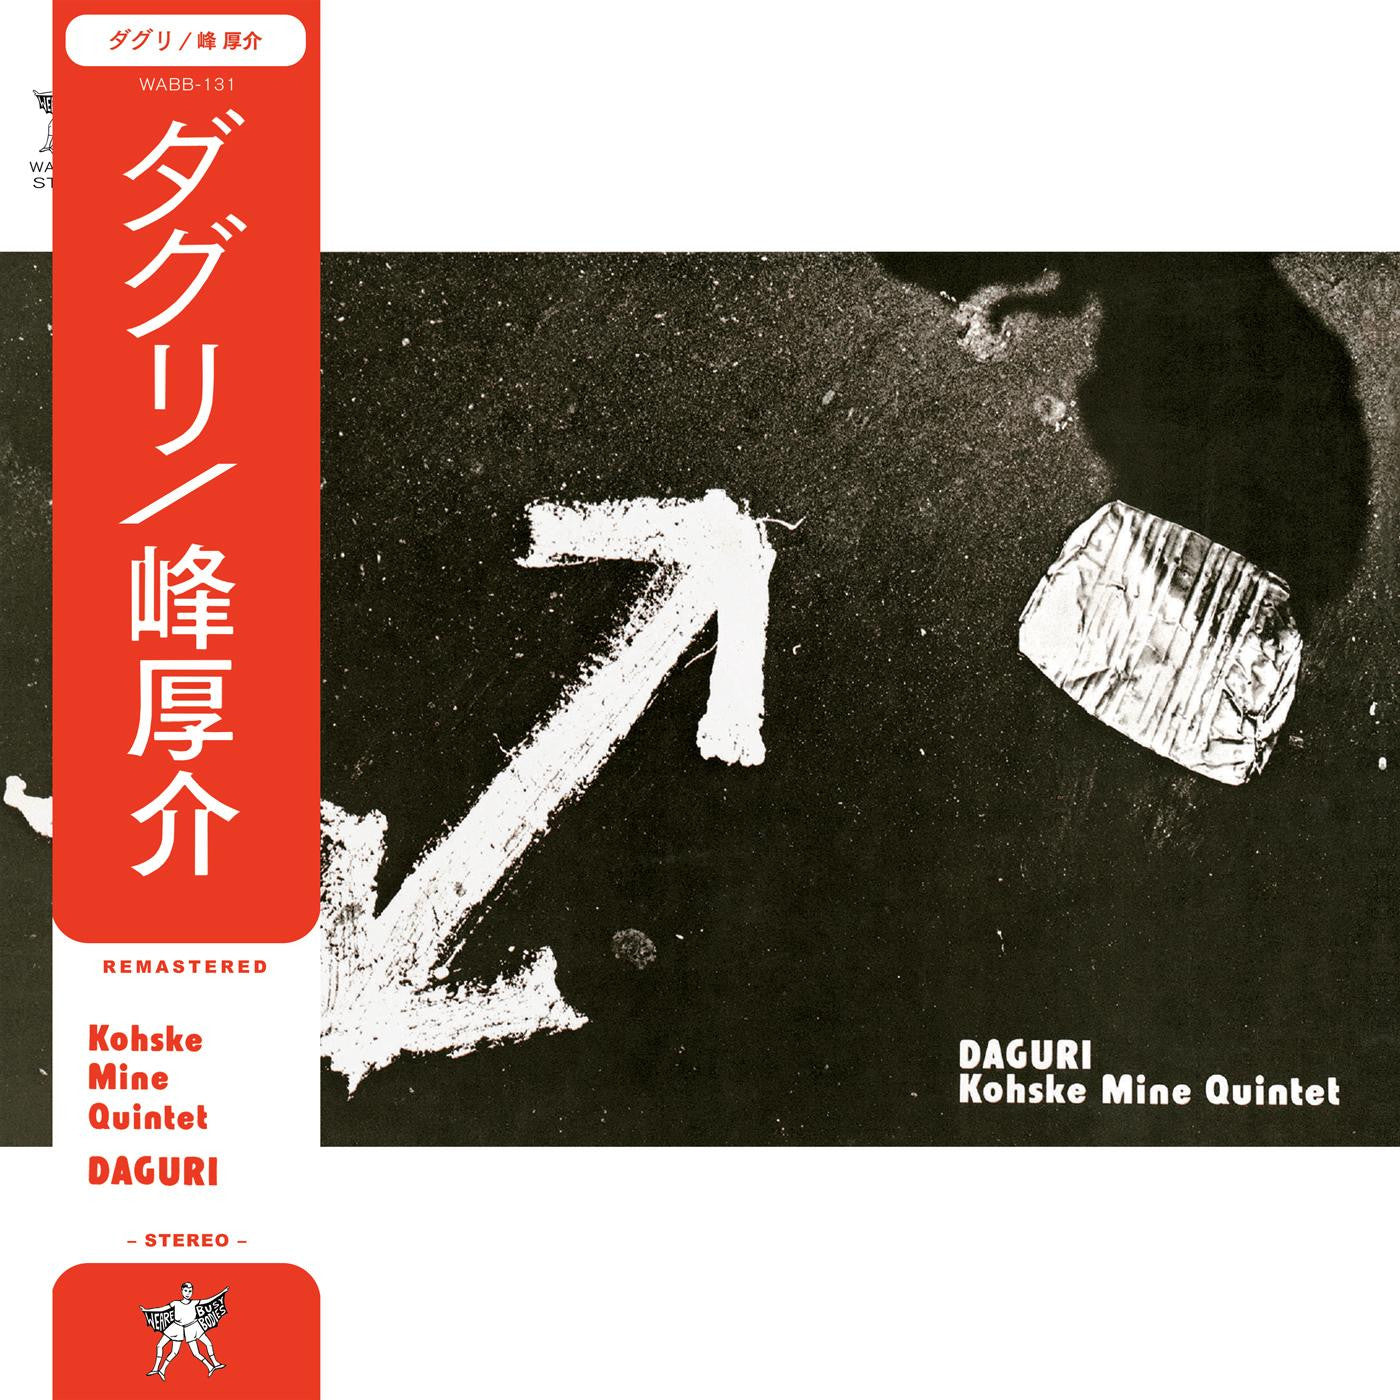 Mine Quintet, Kohske – Daguri [1972 Jazz Japan] – New LP